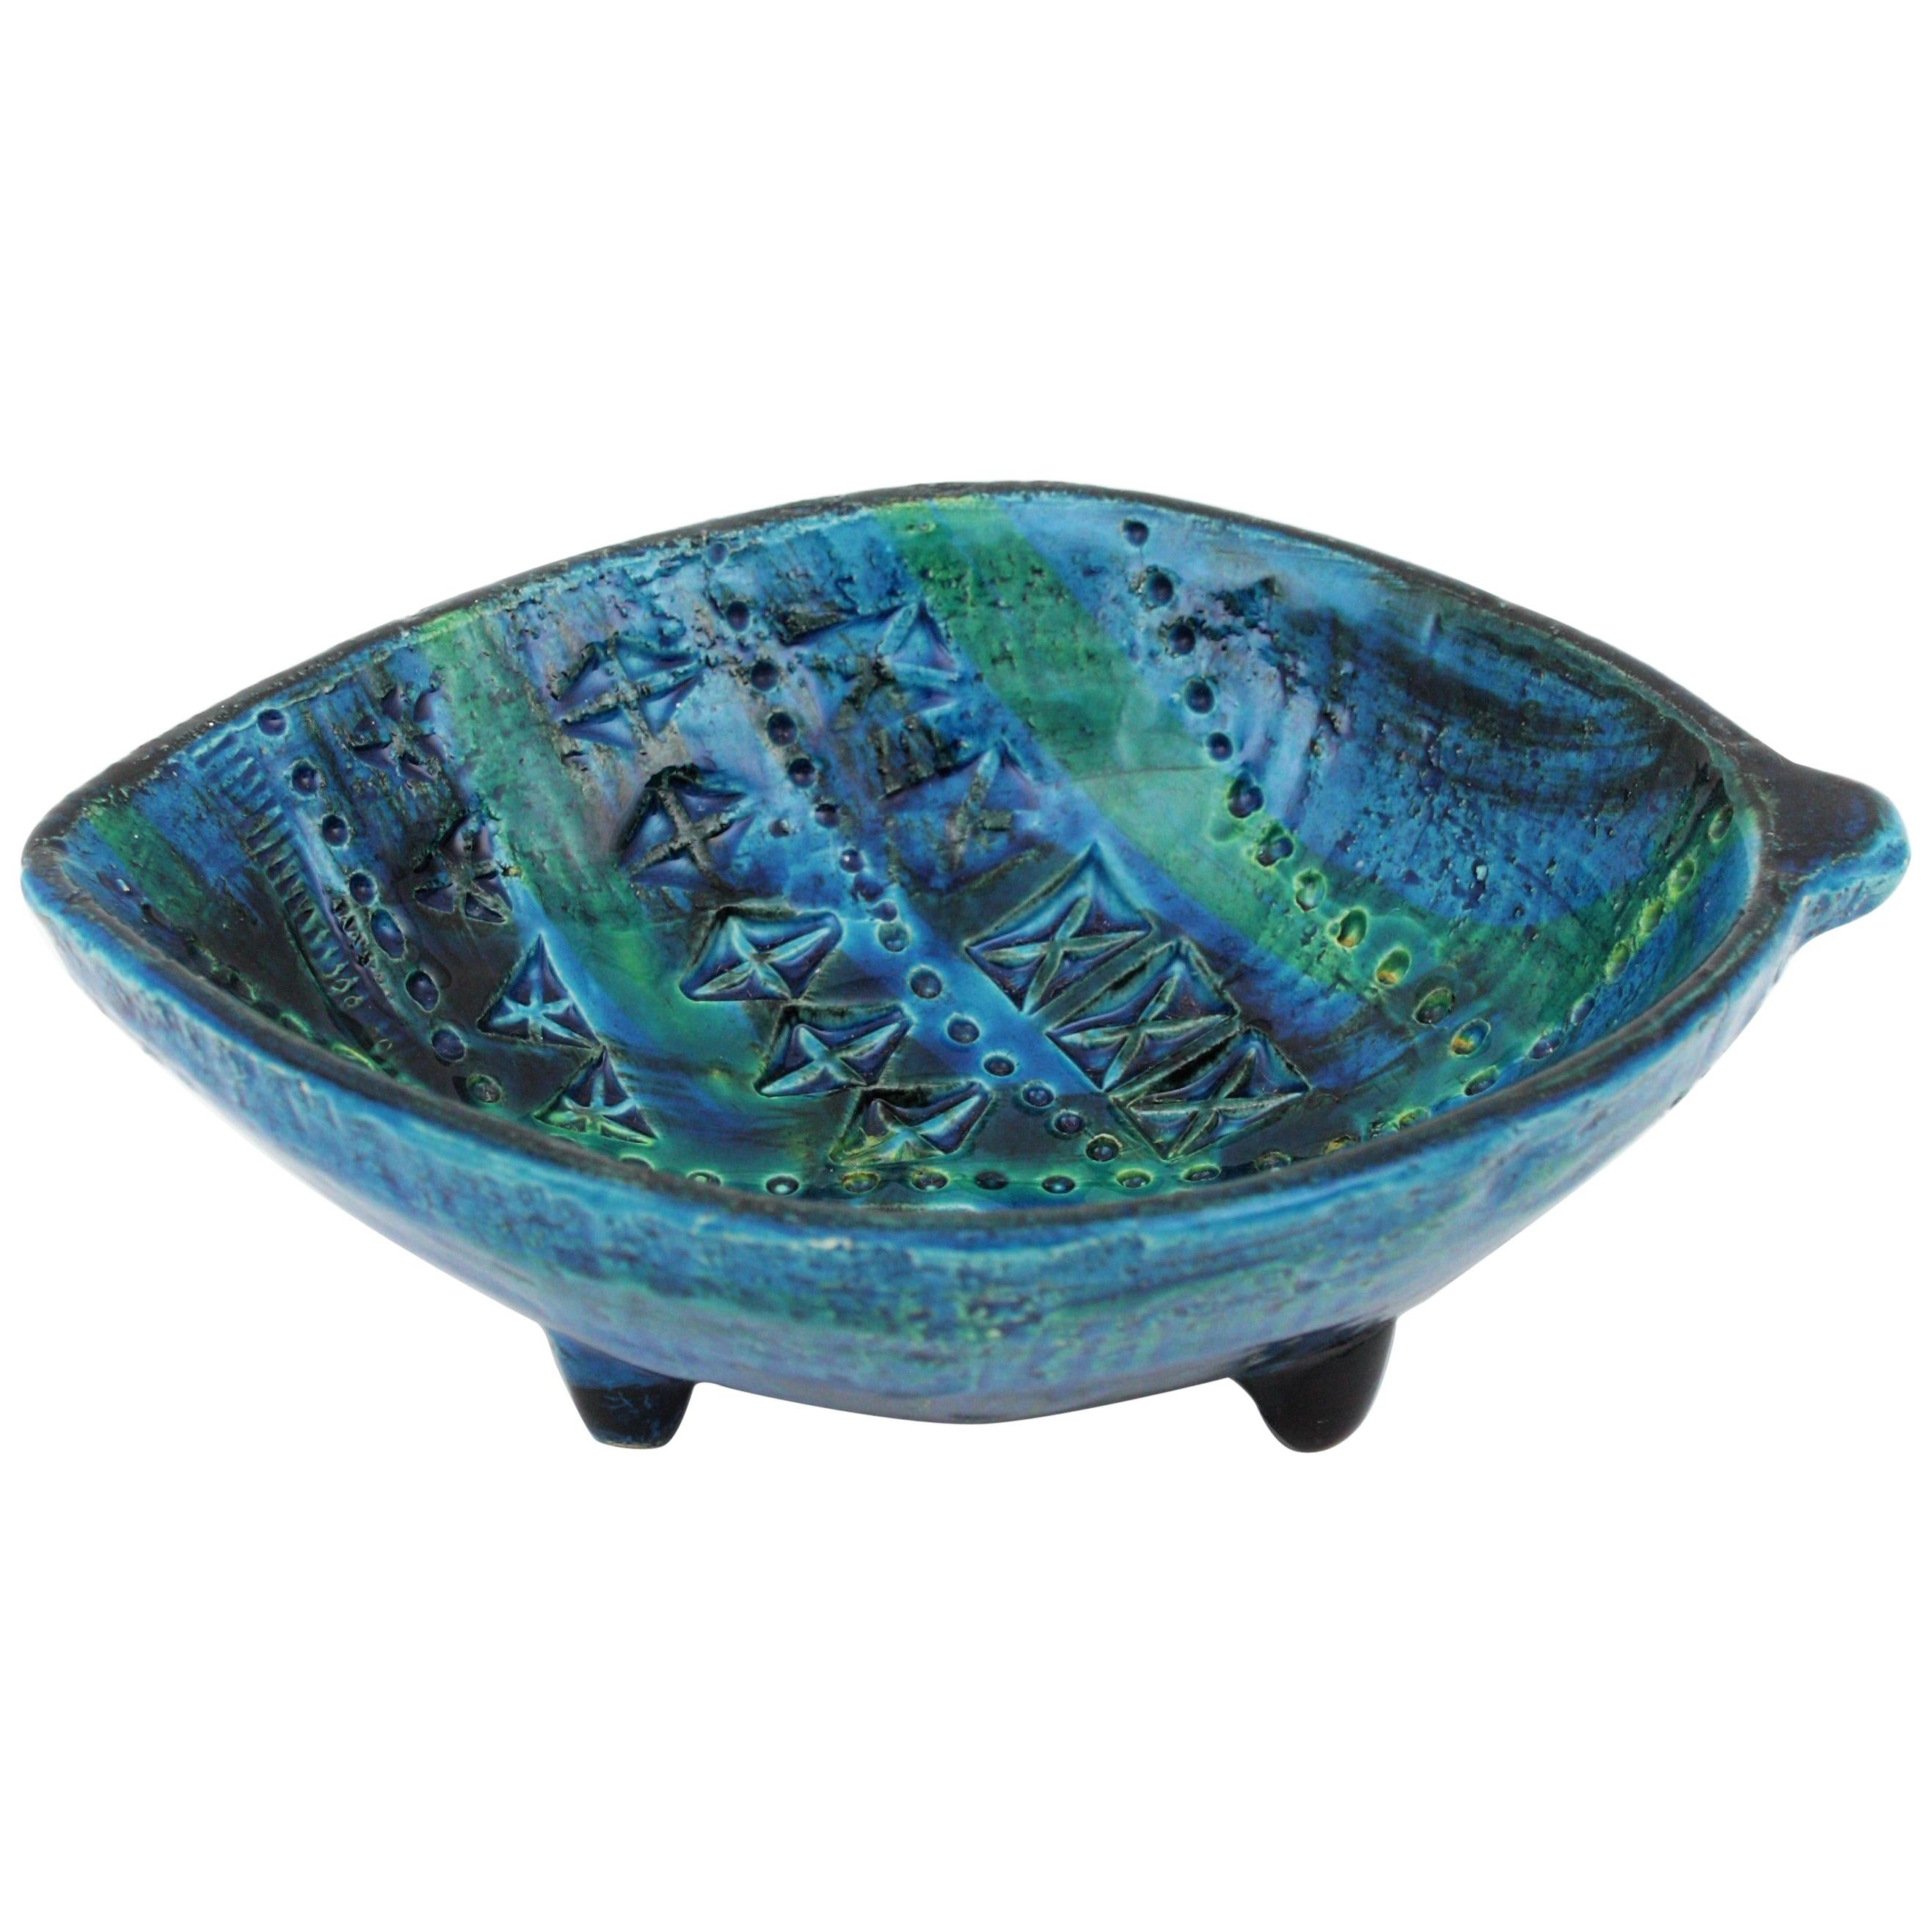 Aldo Londi for Bitossi Rimini Blu Leaf Shaped Glazed Ceramic Bowl / Ashtray For Sale 9